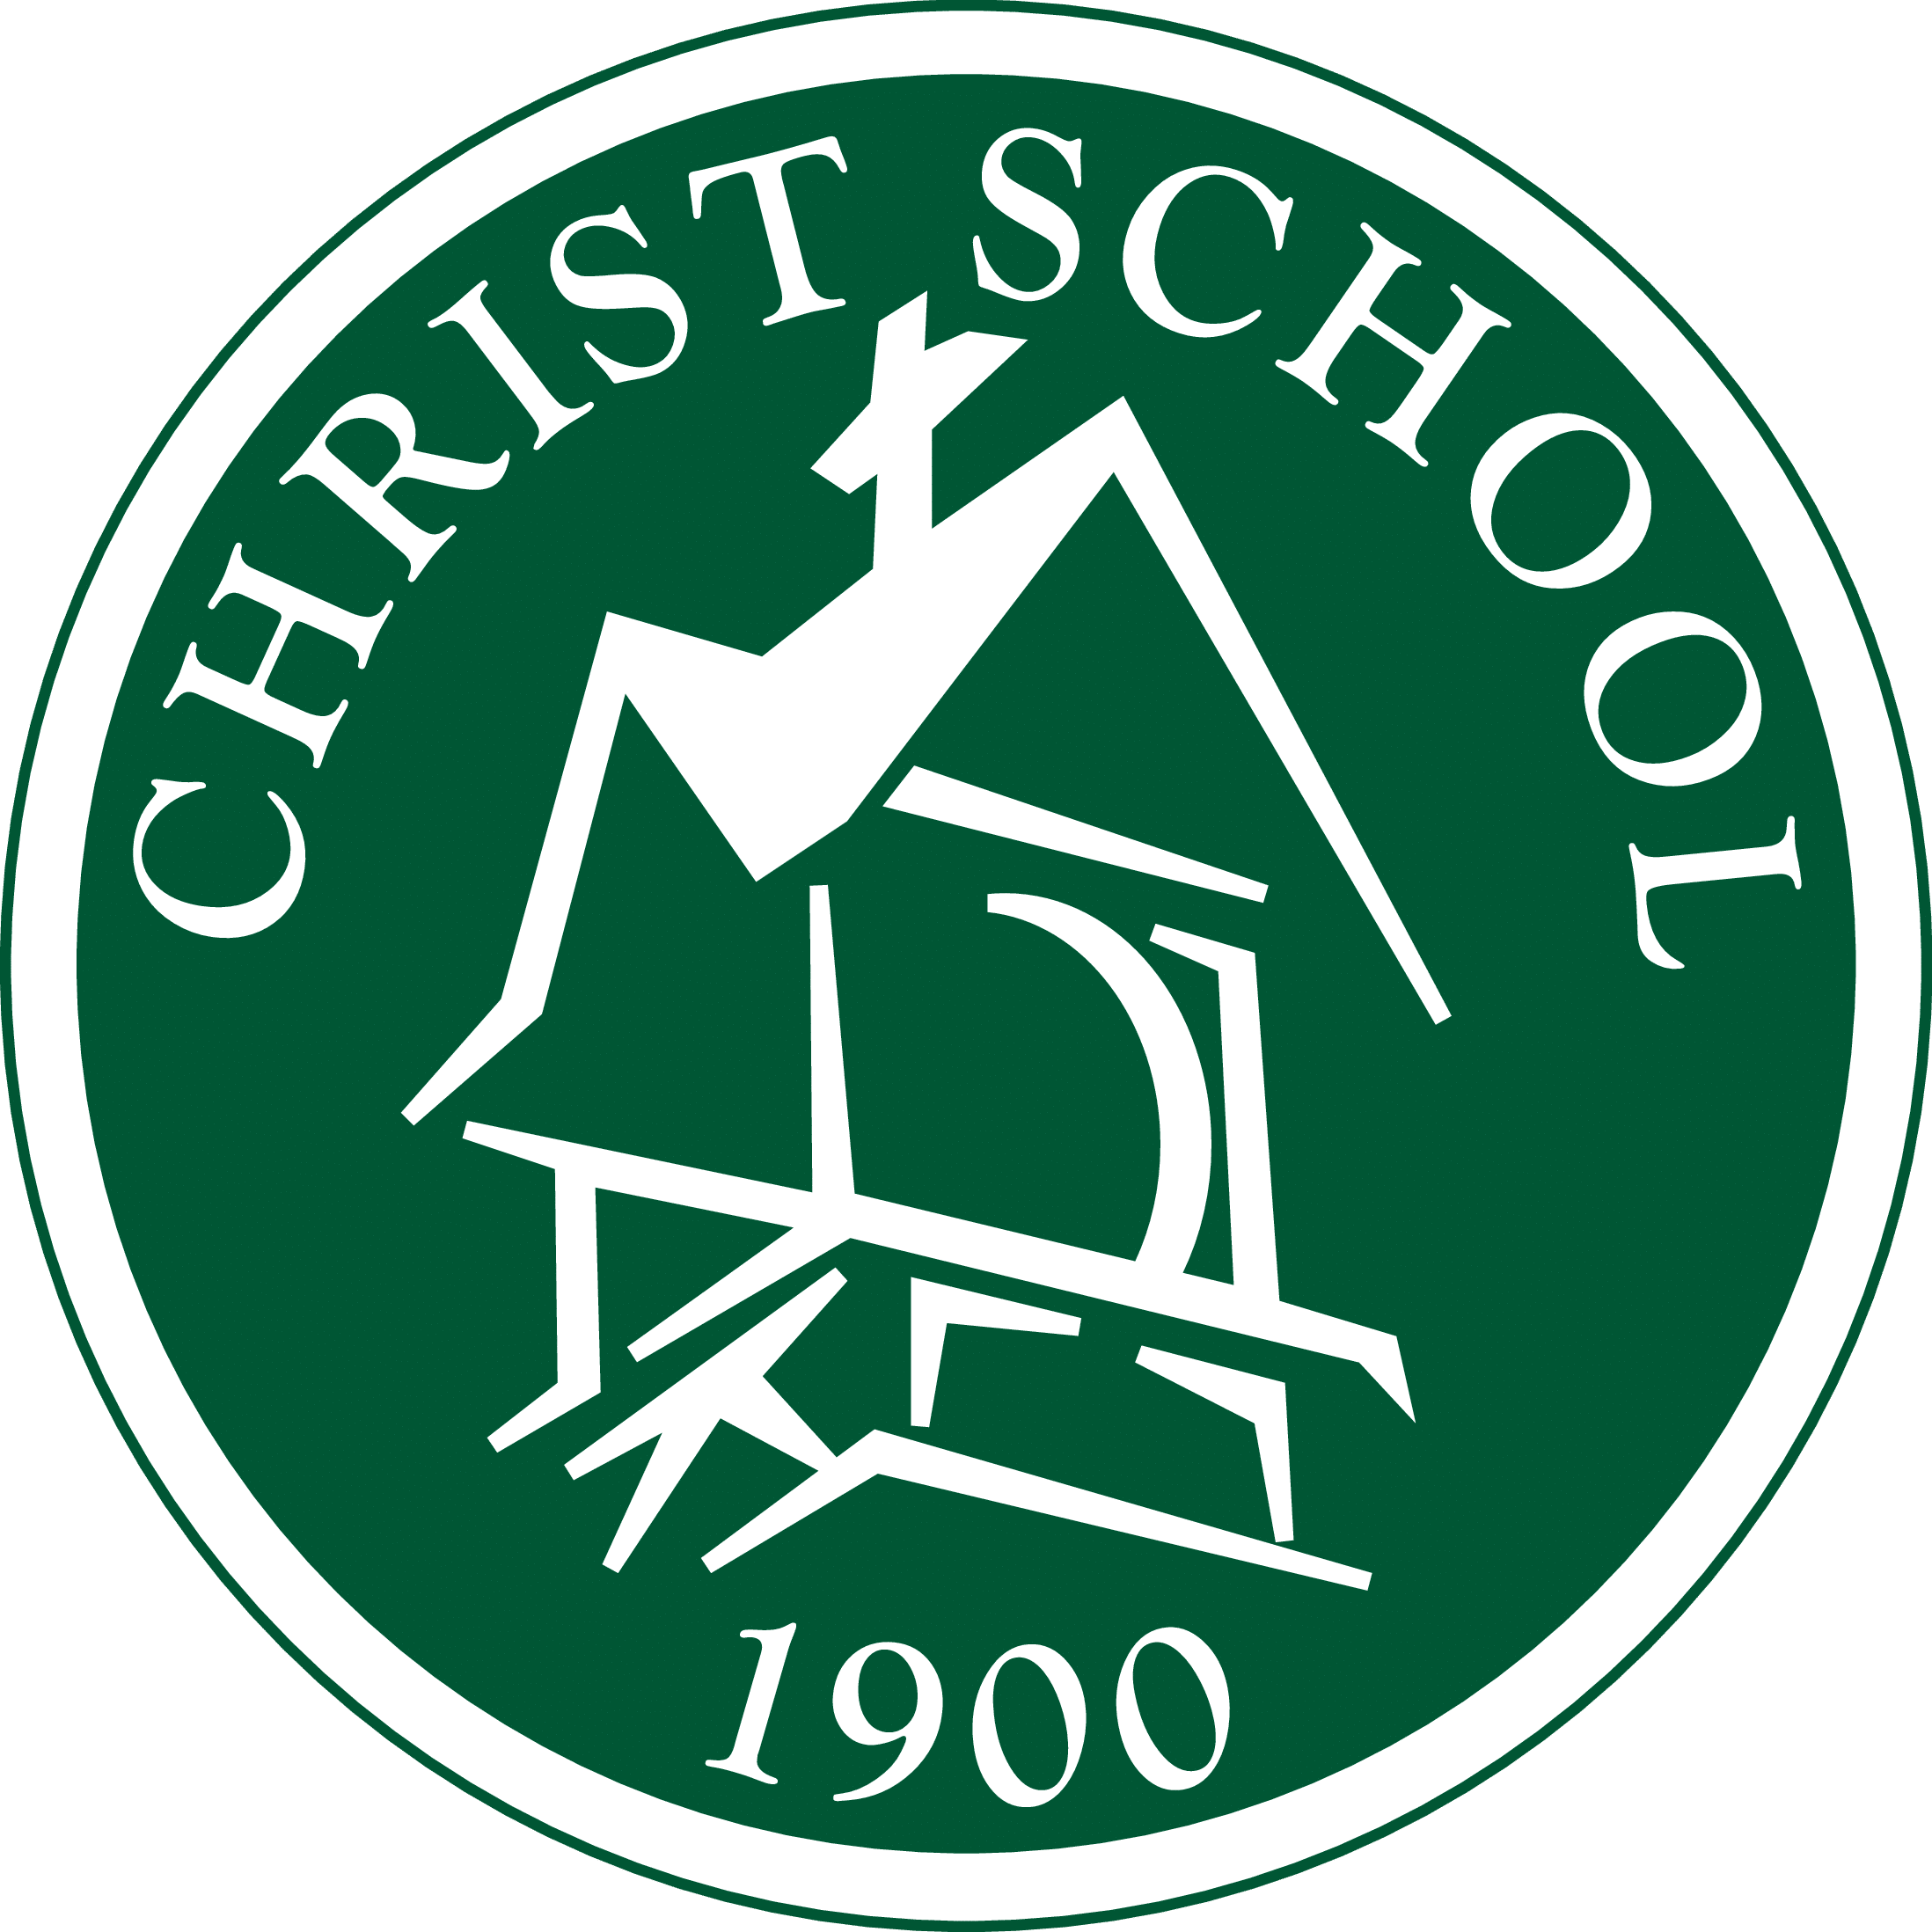 Christ School